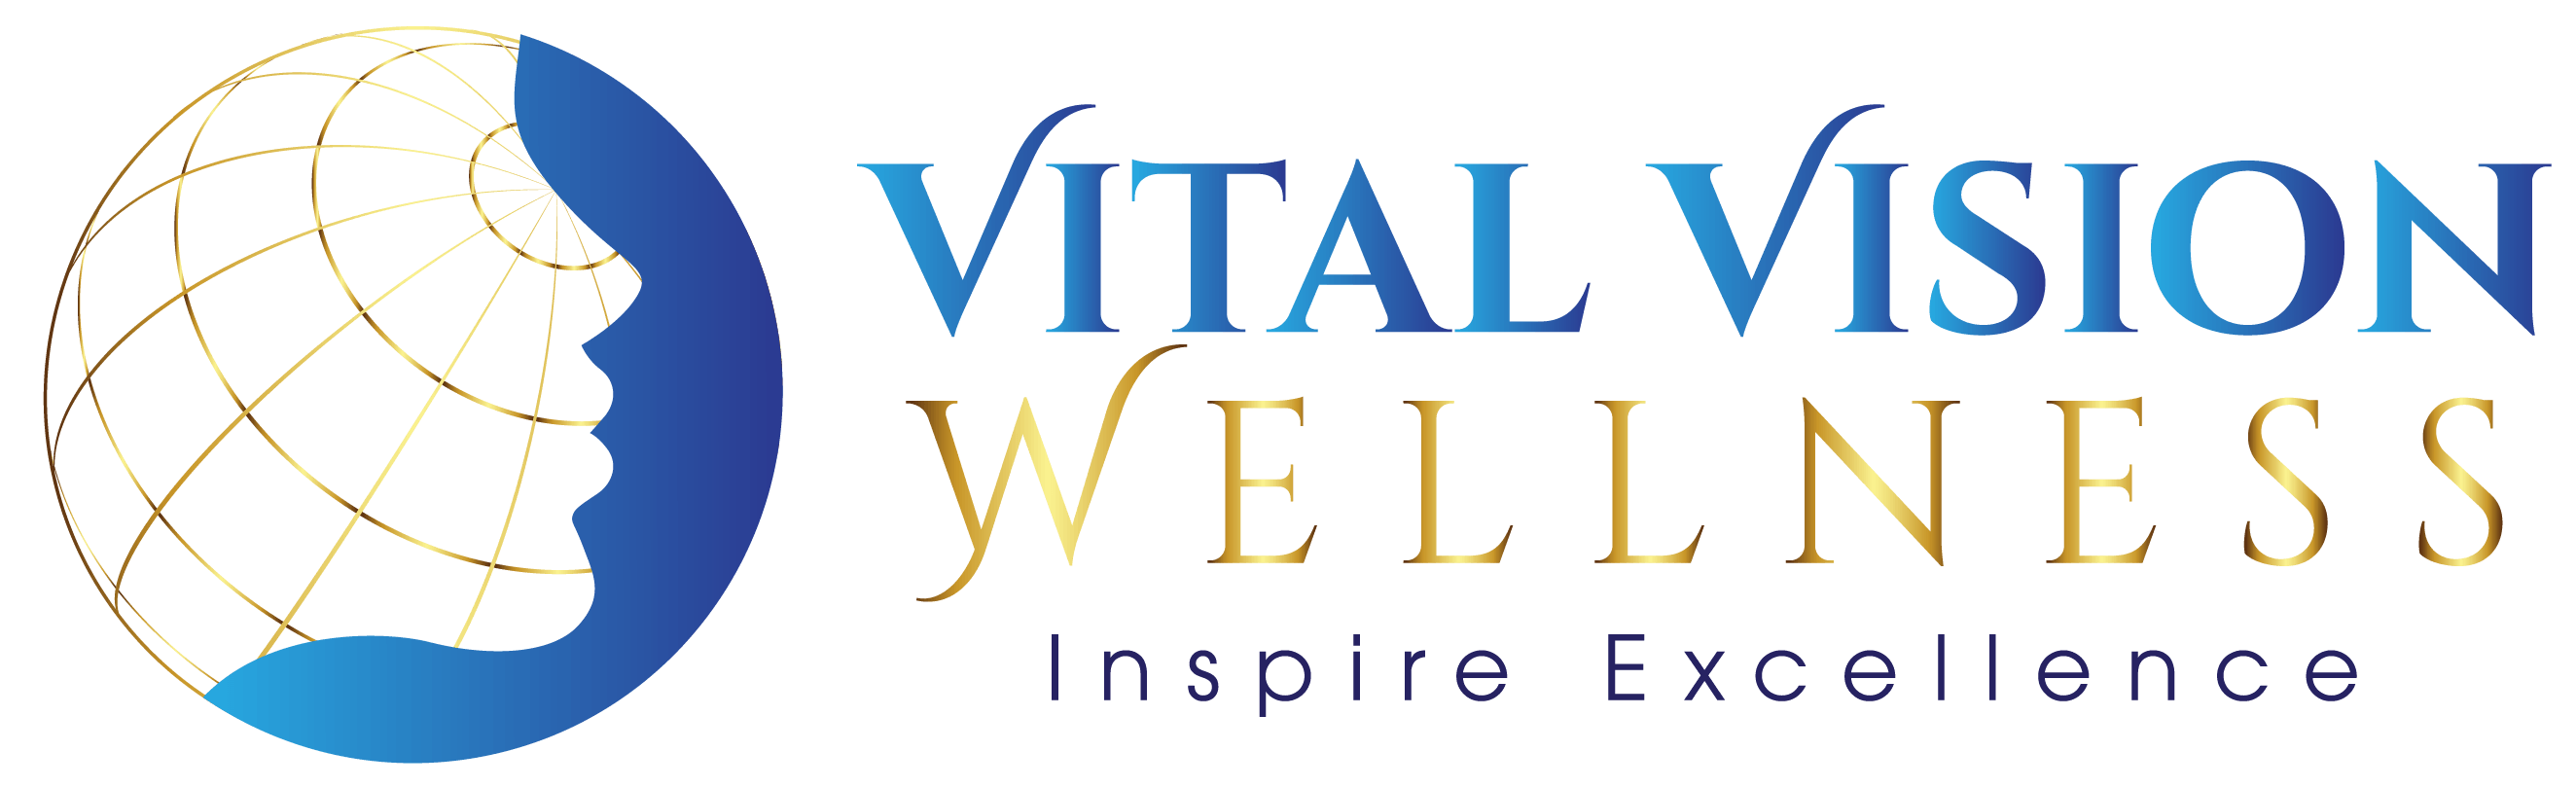 Vital Vision Wellness-3-01